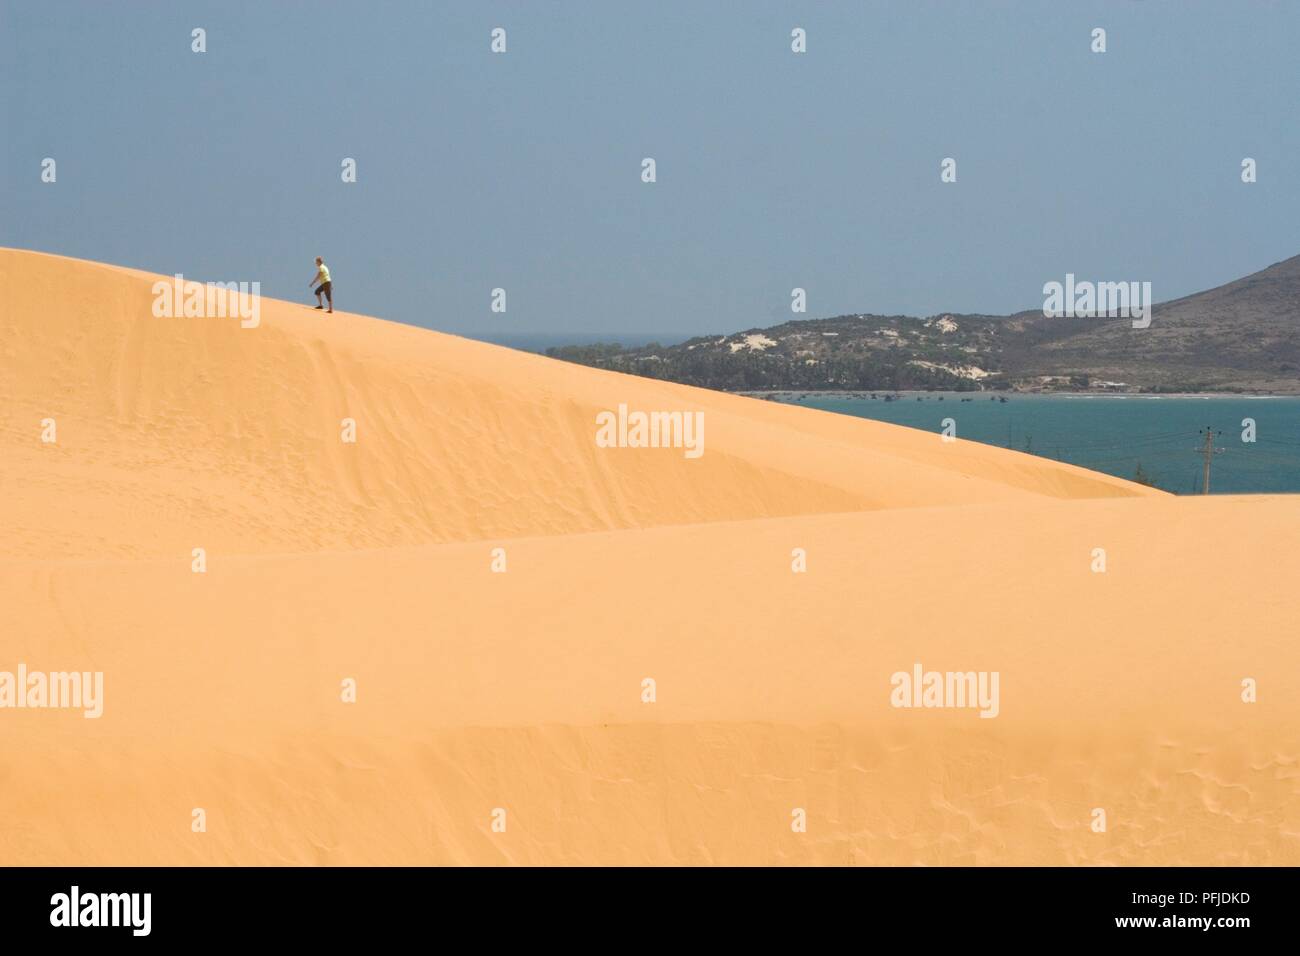 Vietnam, Phan Thiet, Mui Ne Beach, Bao Trang, man climbing golden sand dunes by a lake Stock Photo